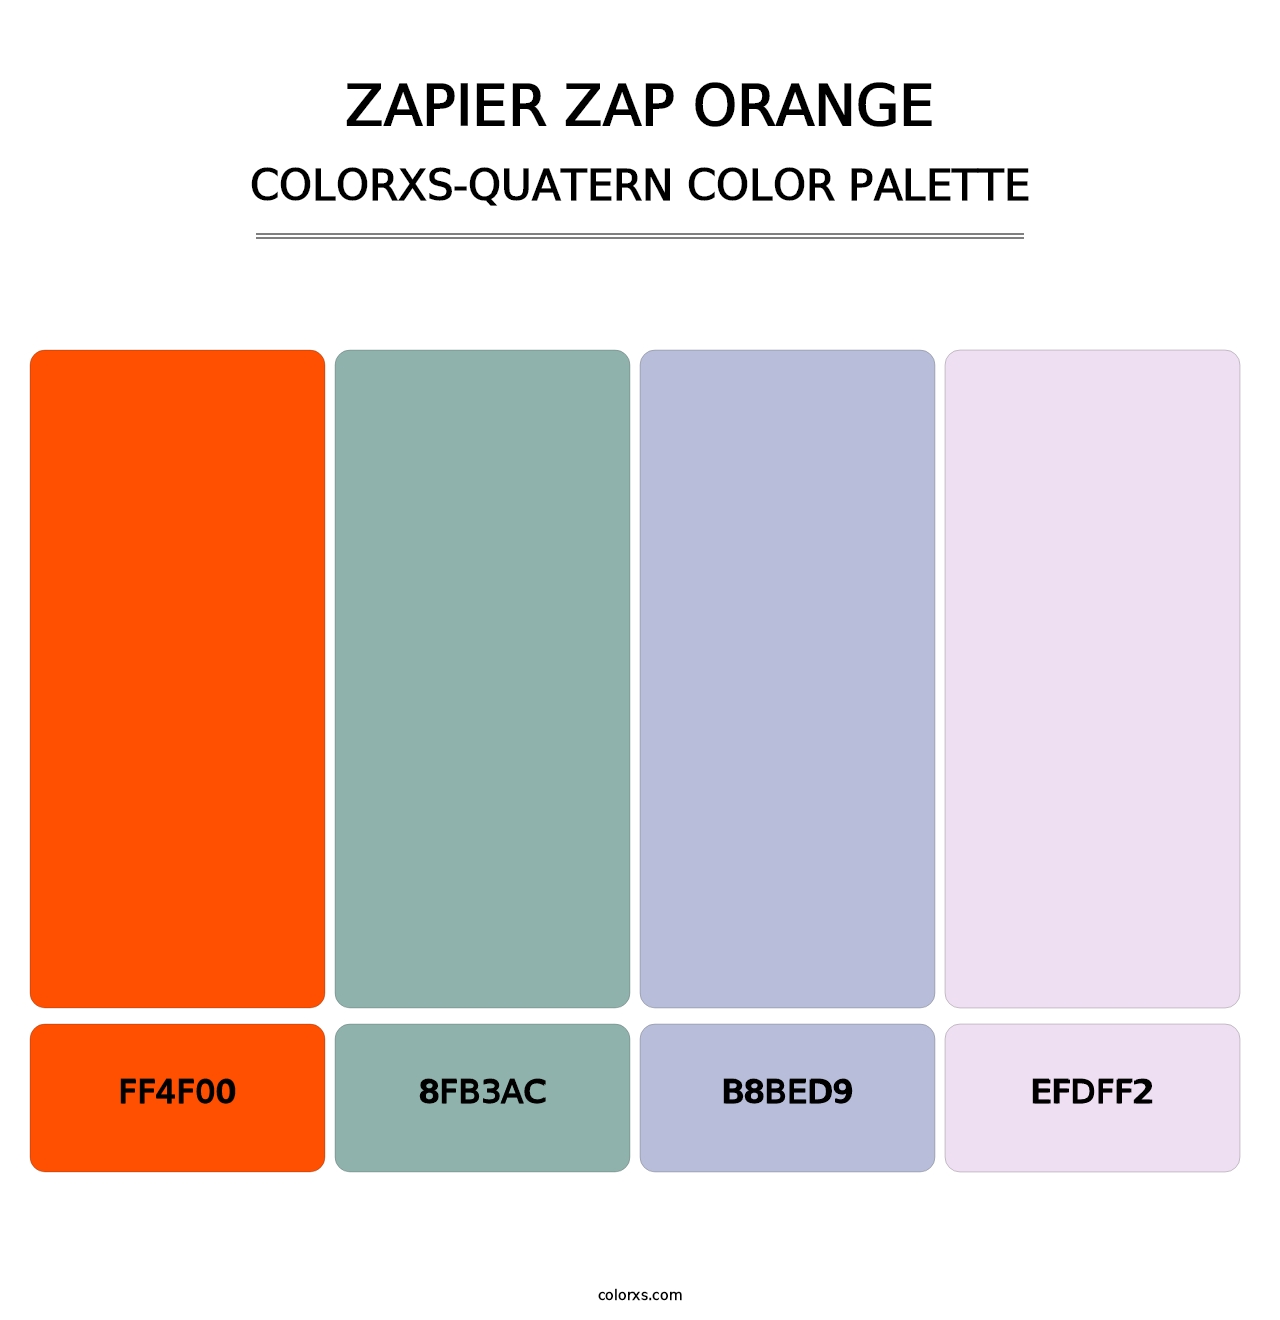 Zapier Zap Orange - Colorxs Quatern Palette